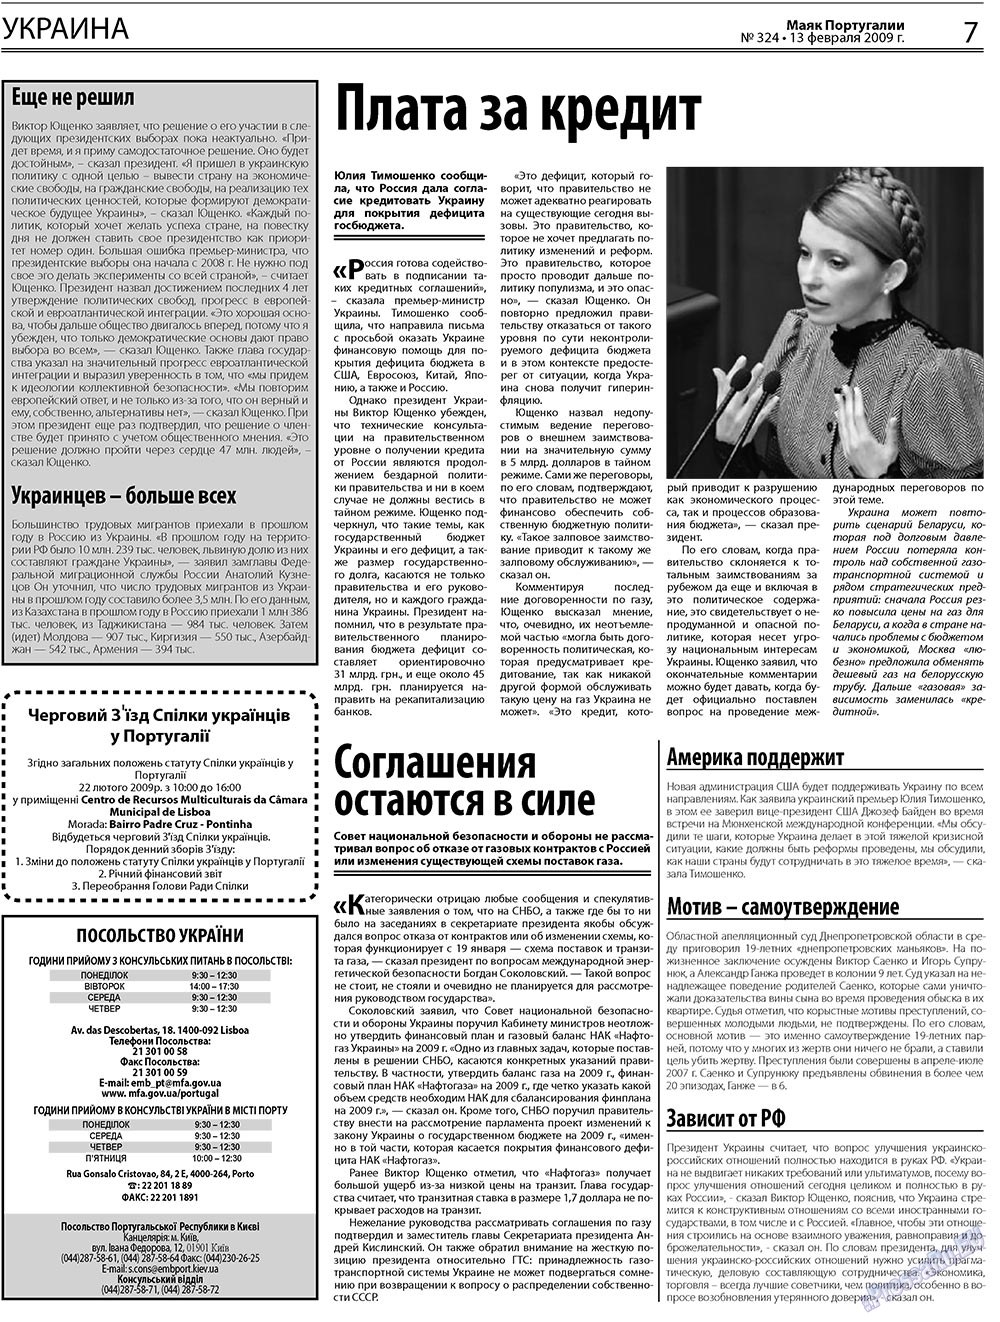 Маяк Португалии, газета. 2009 №7 стр.7